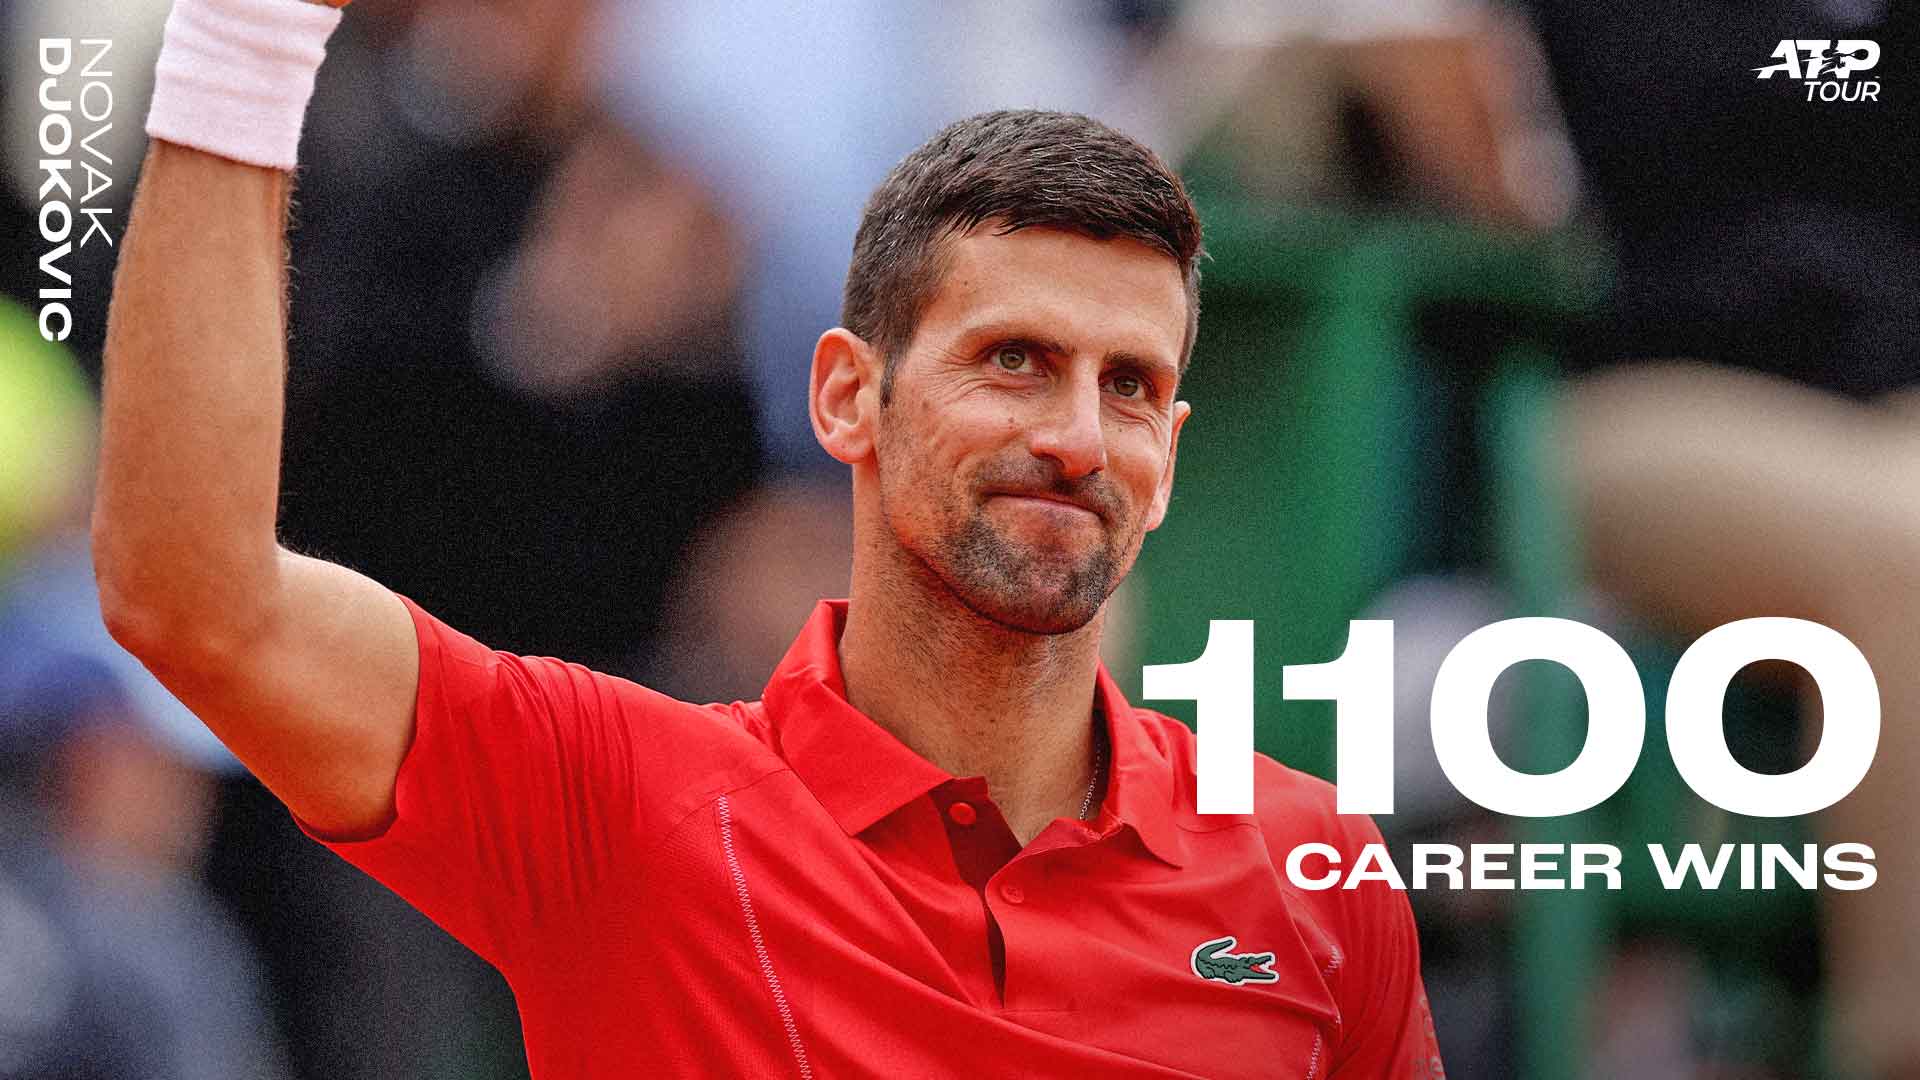 11 iconic wins among Djokovic's 1,100 career victories